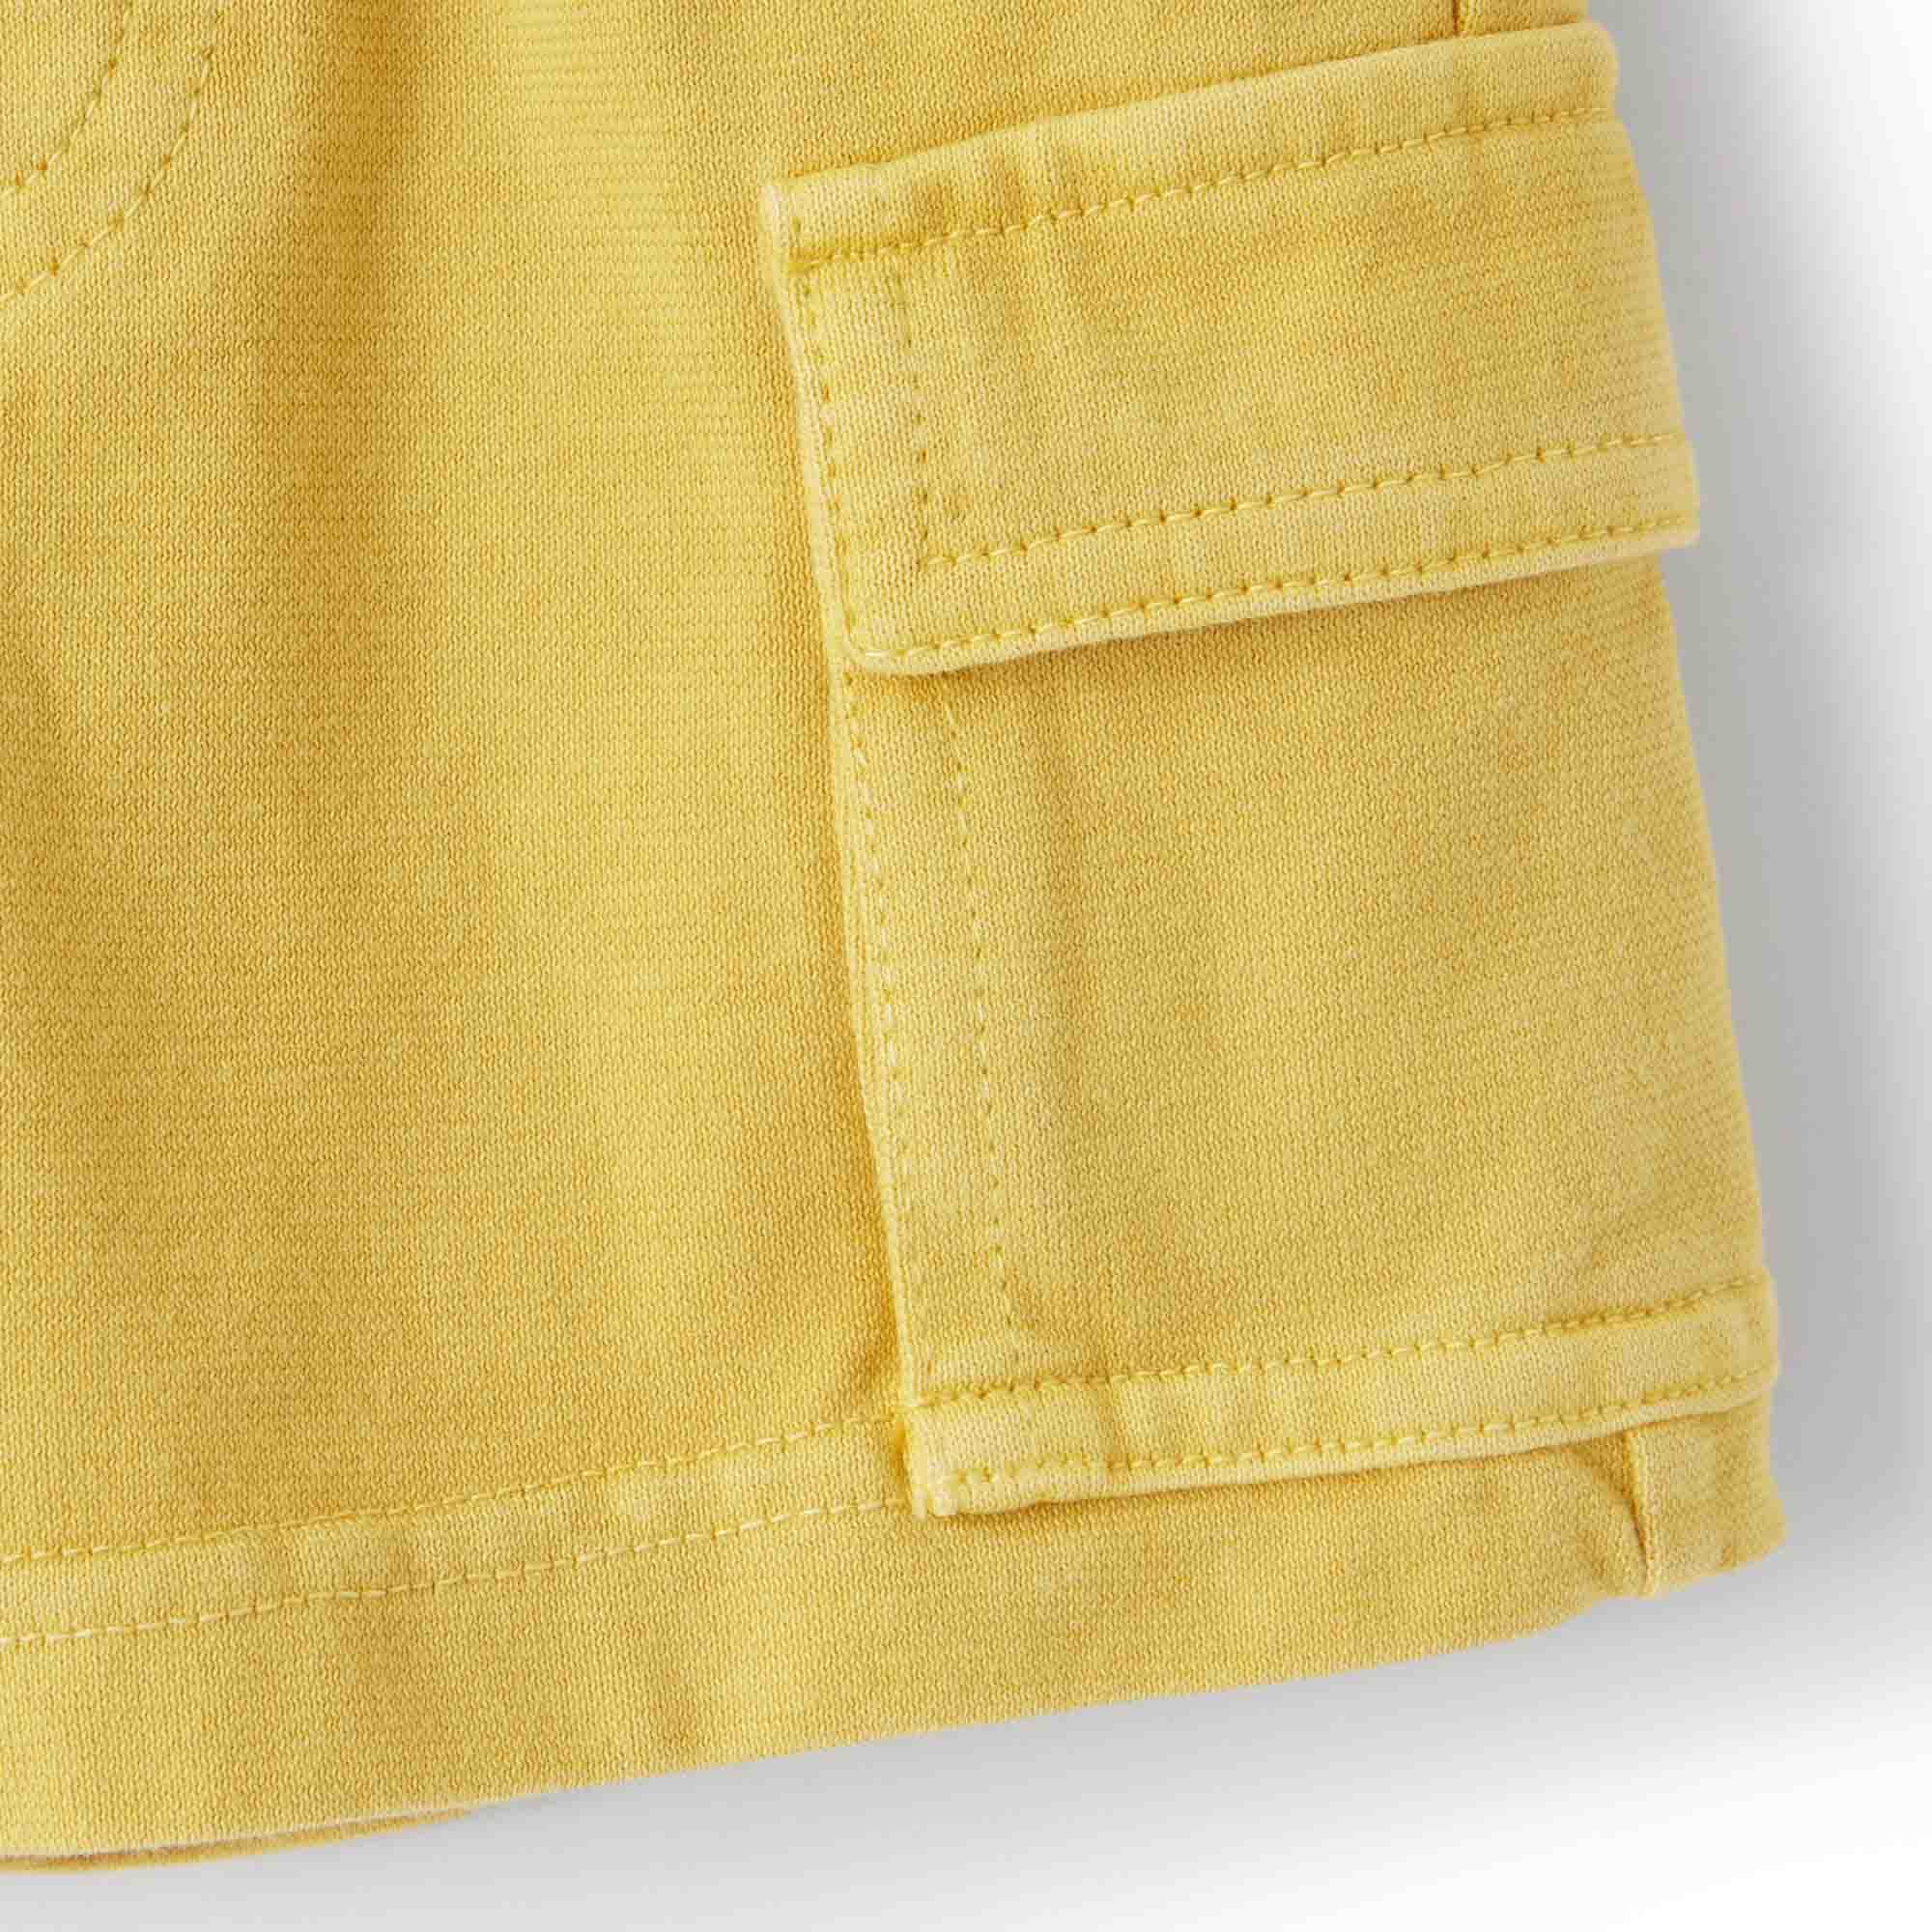 Baby Boys & Girls Yellow Cotton Shorts